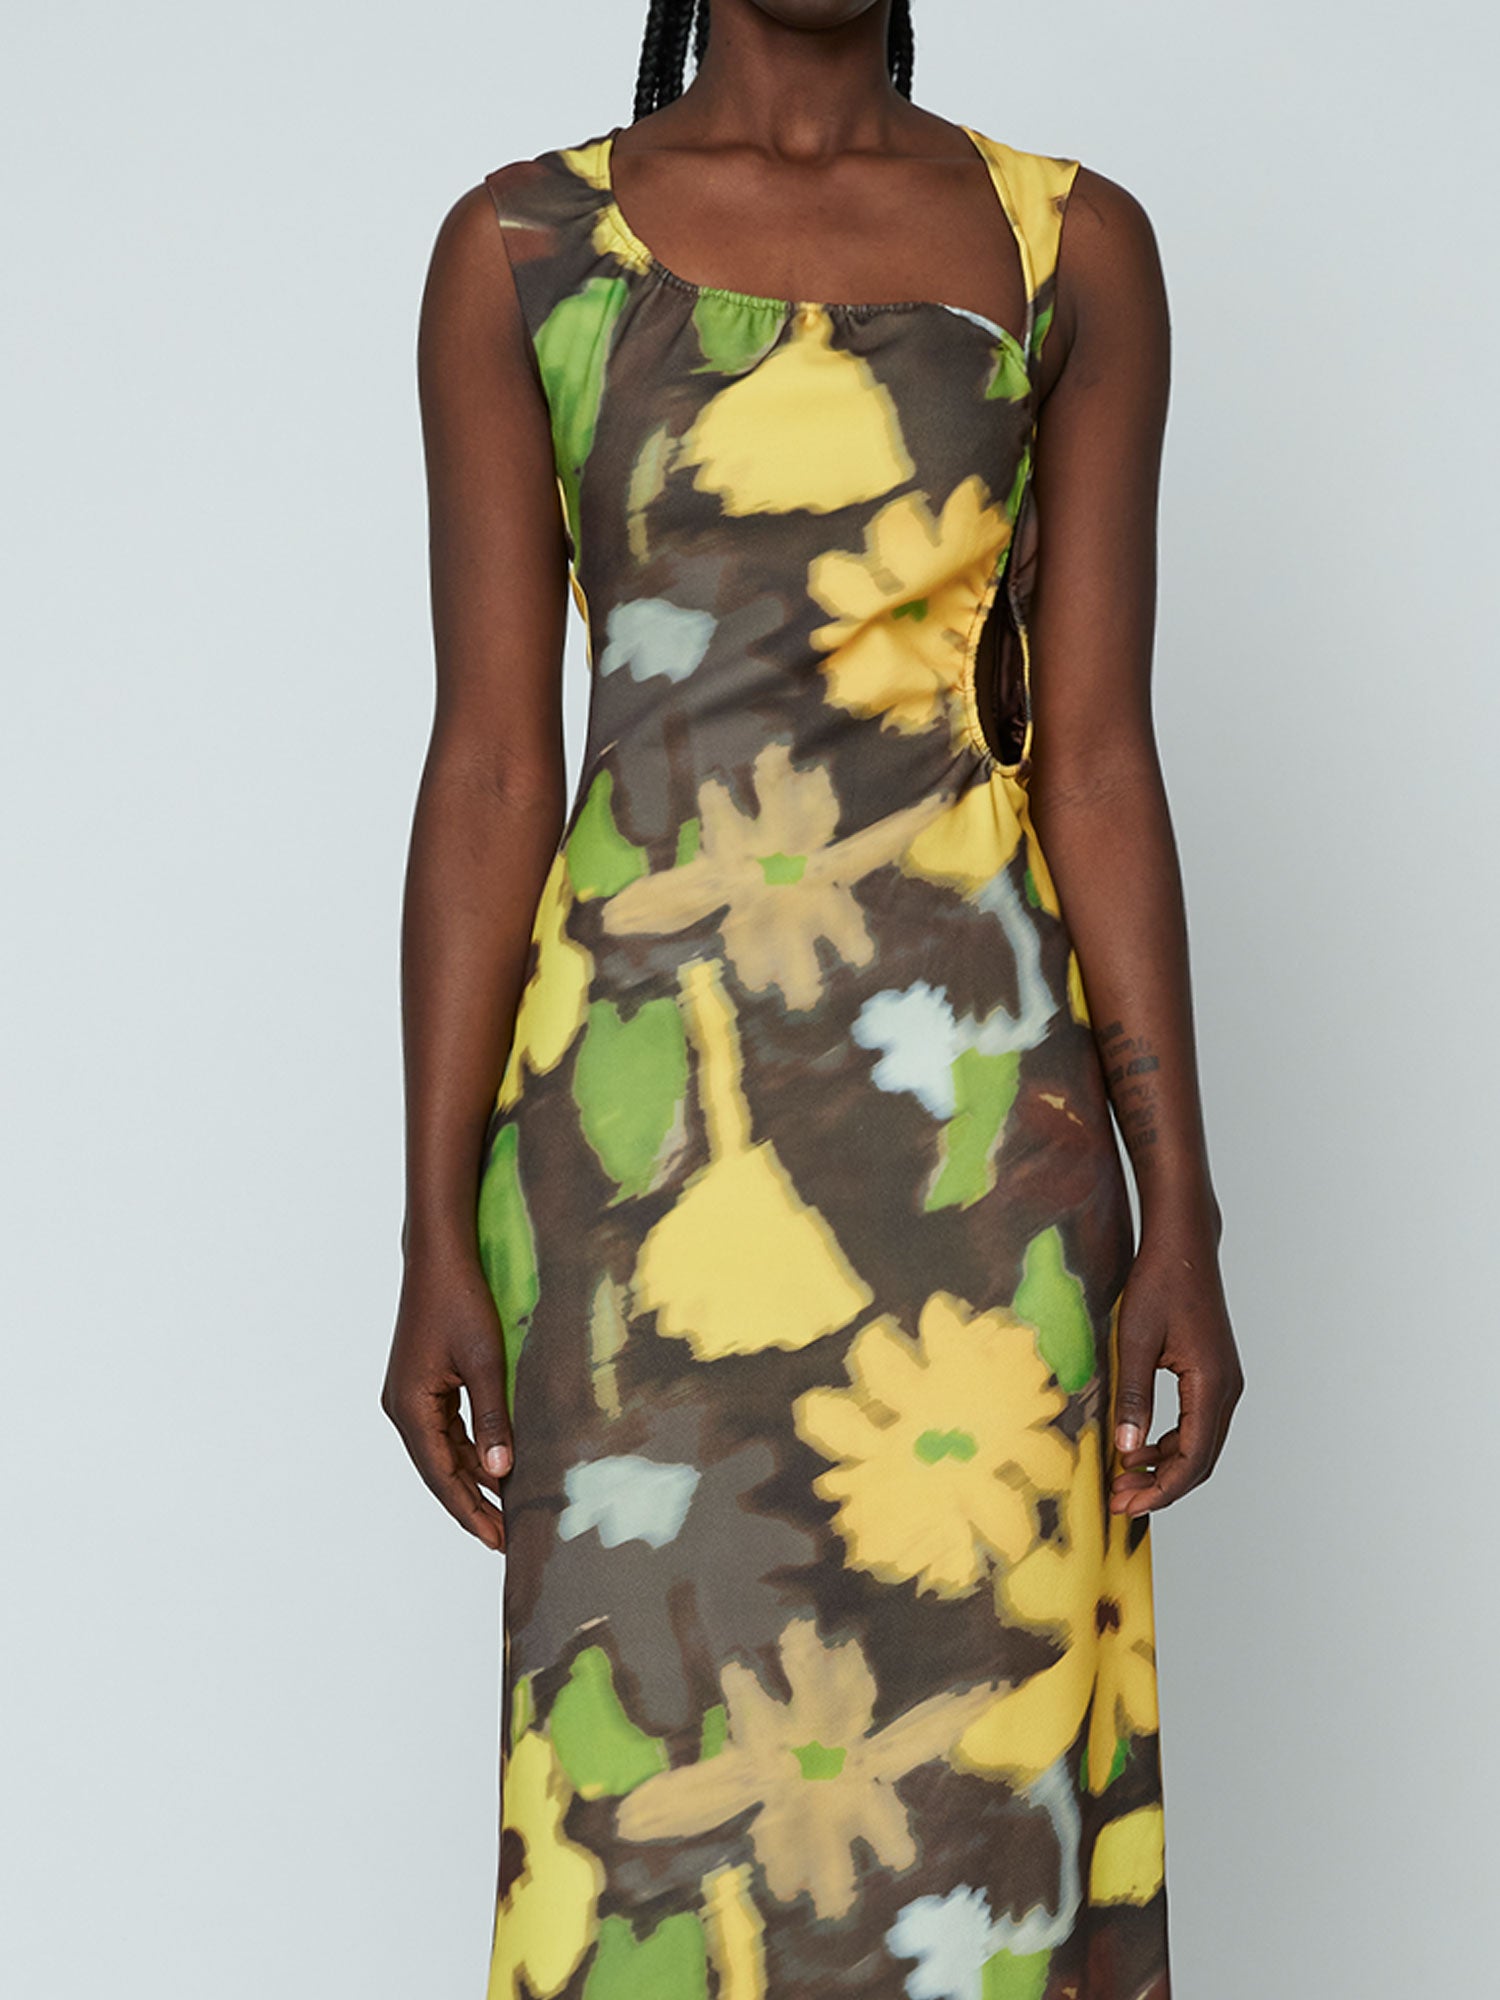 Wynn Hamlyn Ella Maxi Dress in Acid Flowers available at The New Trend Australia.